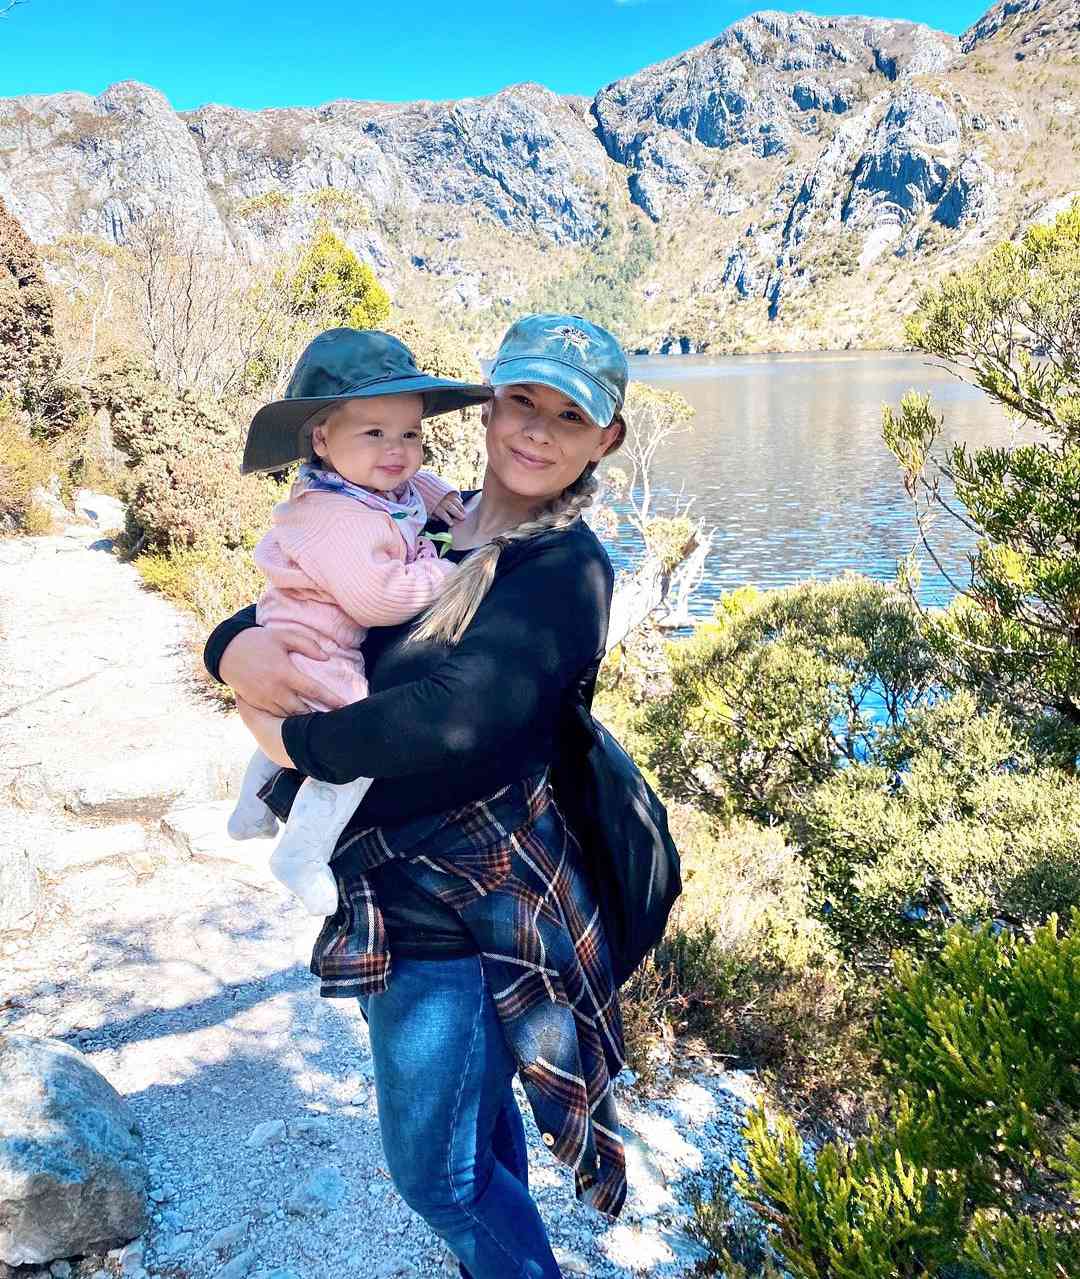 Irwins Take Baby Grace On Hiking 'Adventure'